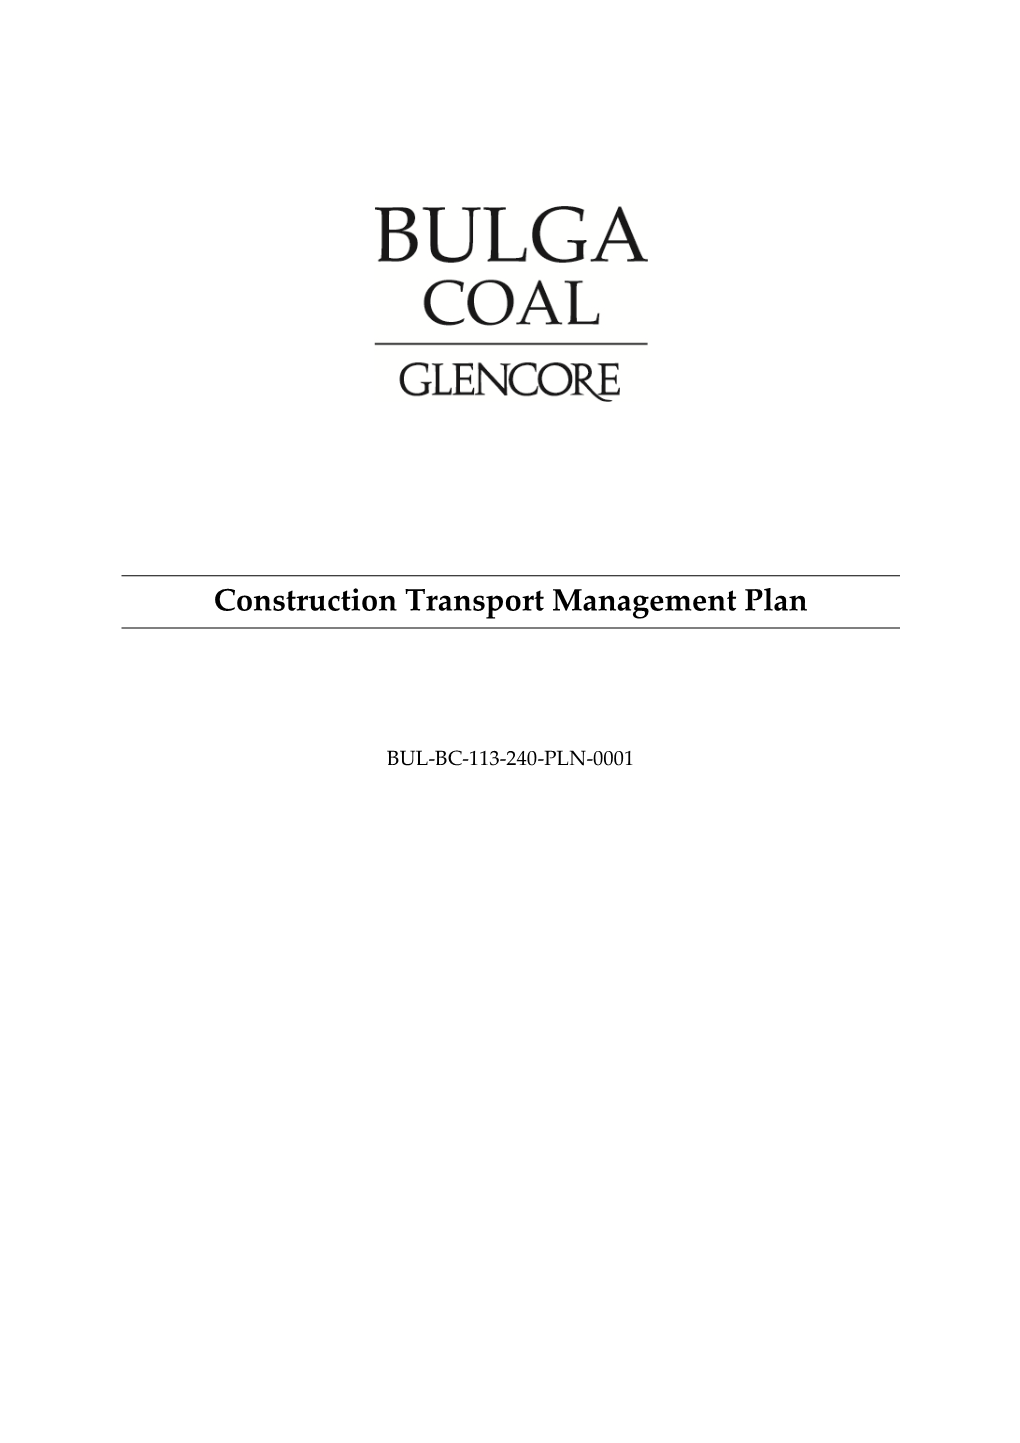 Construction-Transport-Management-Plan-Bulga-Optimisation-Project.Pdf